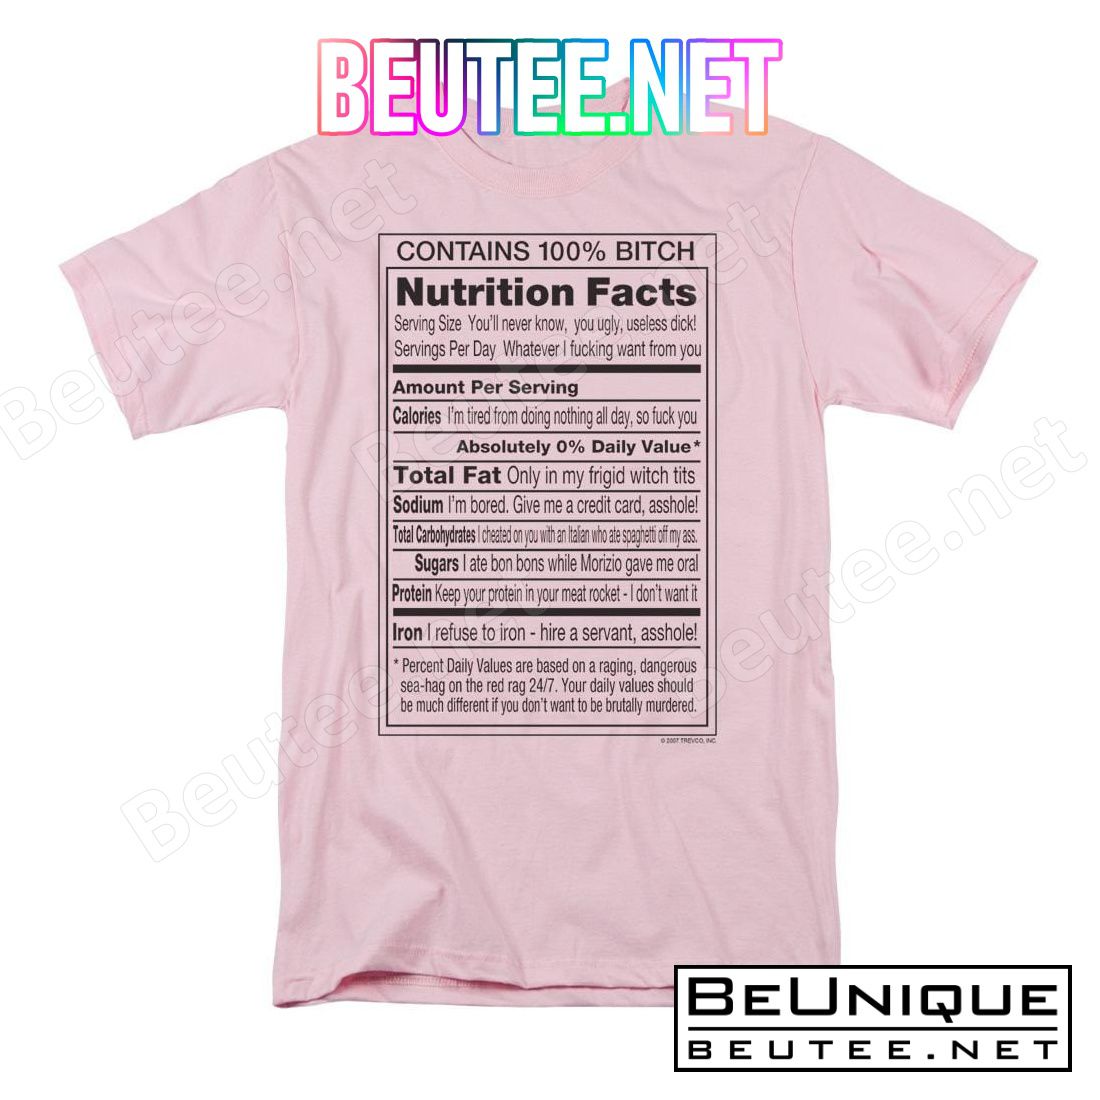 100% Bitch T-shirt